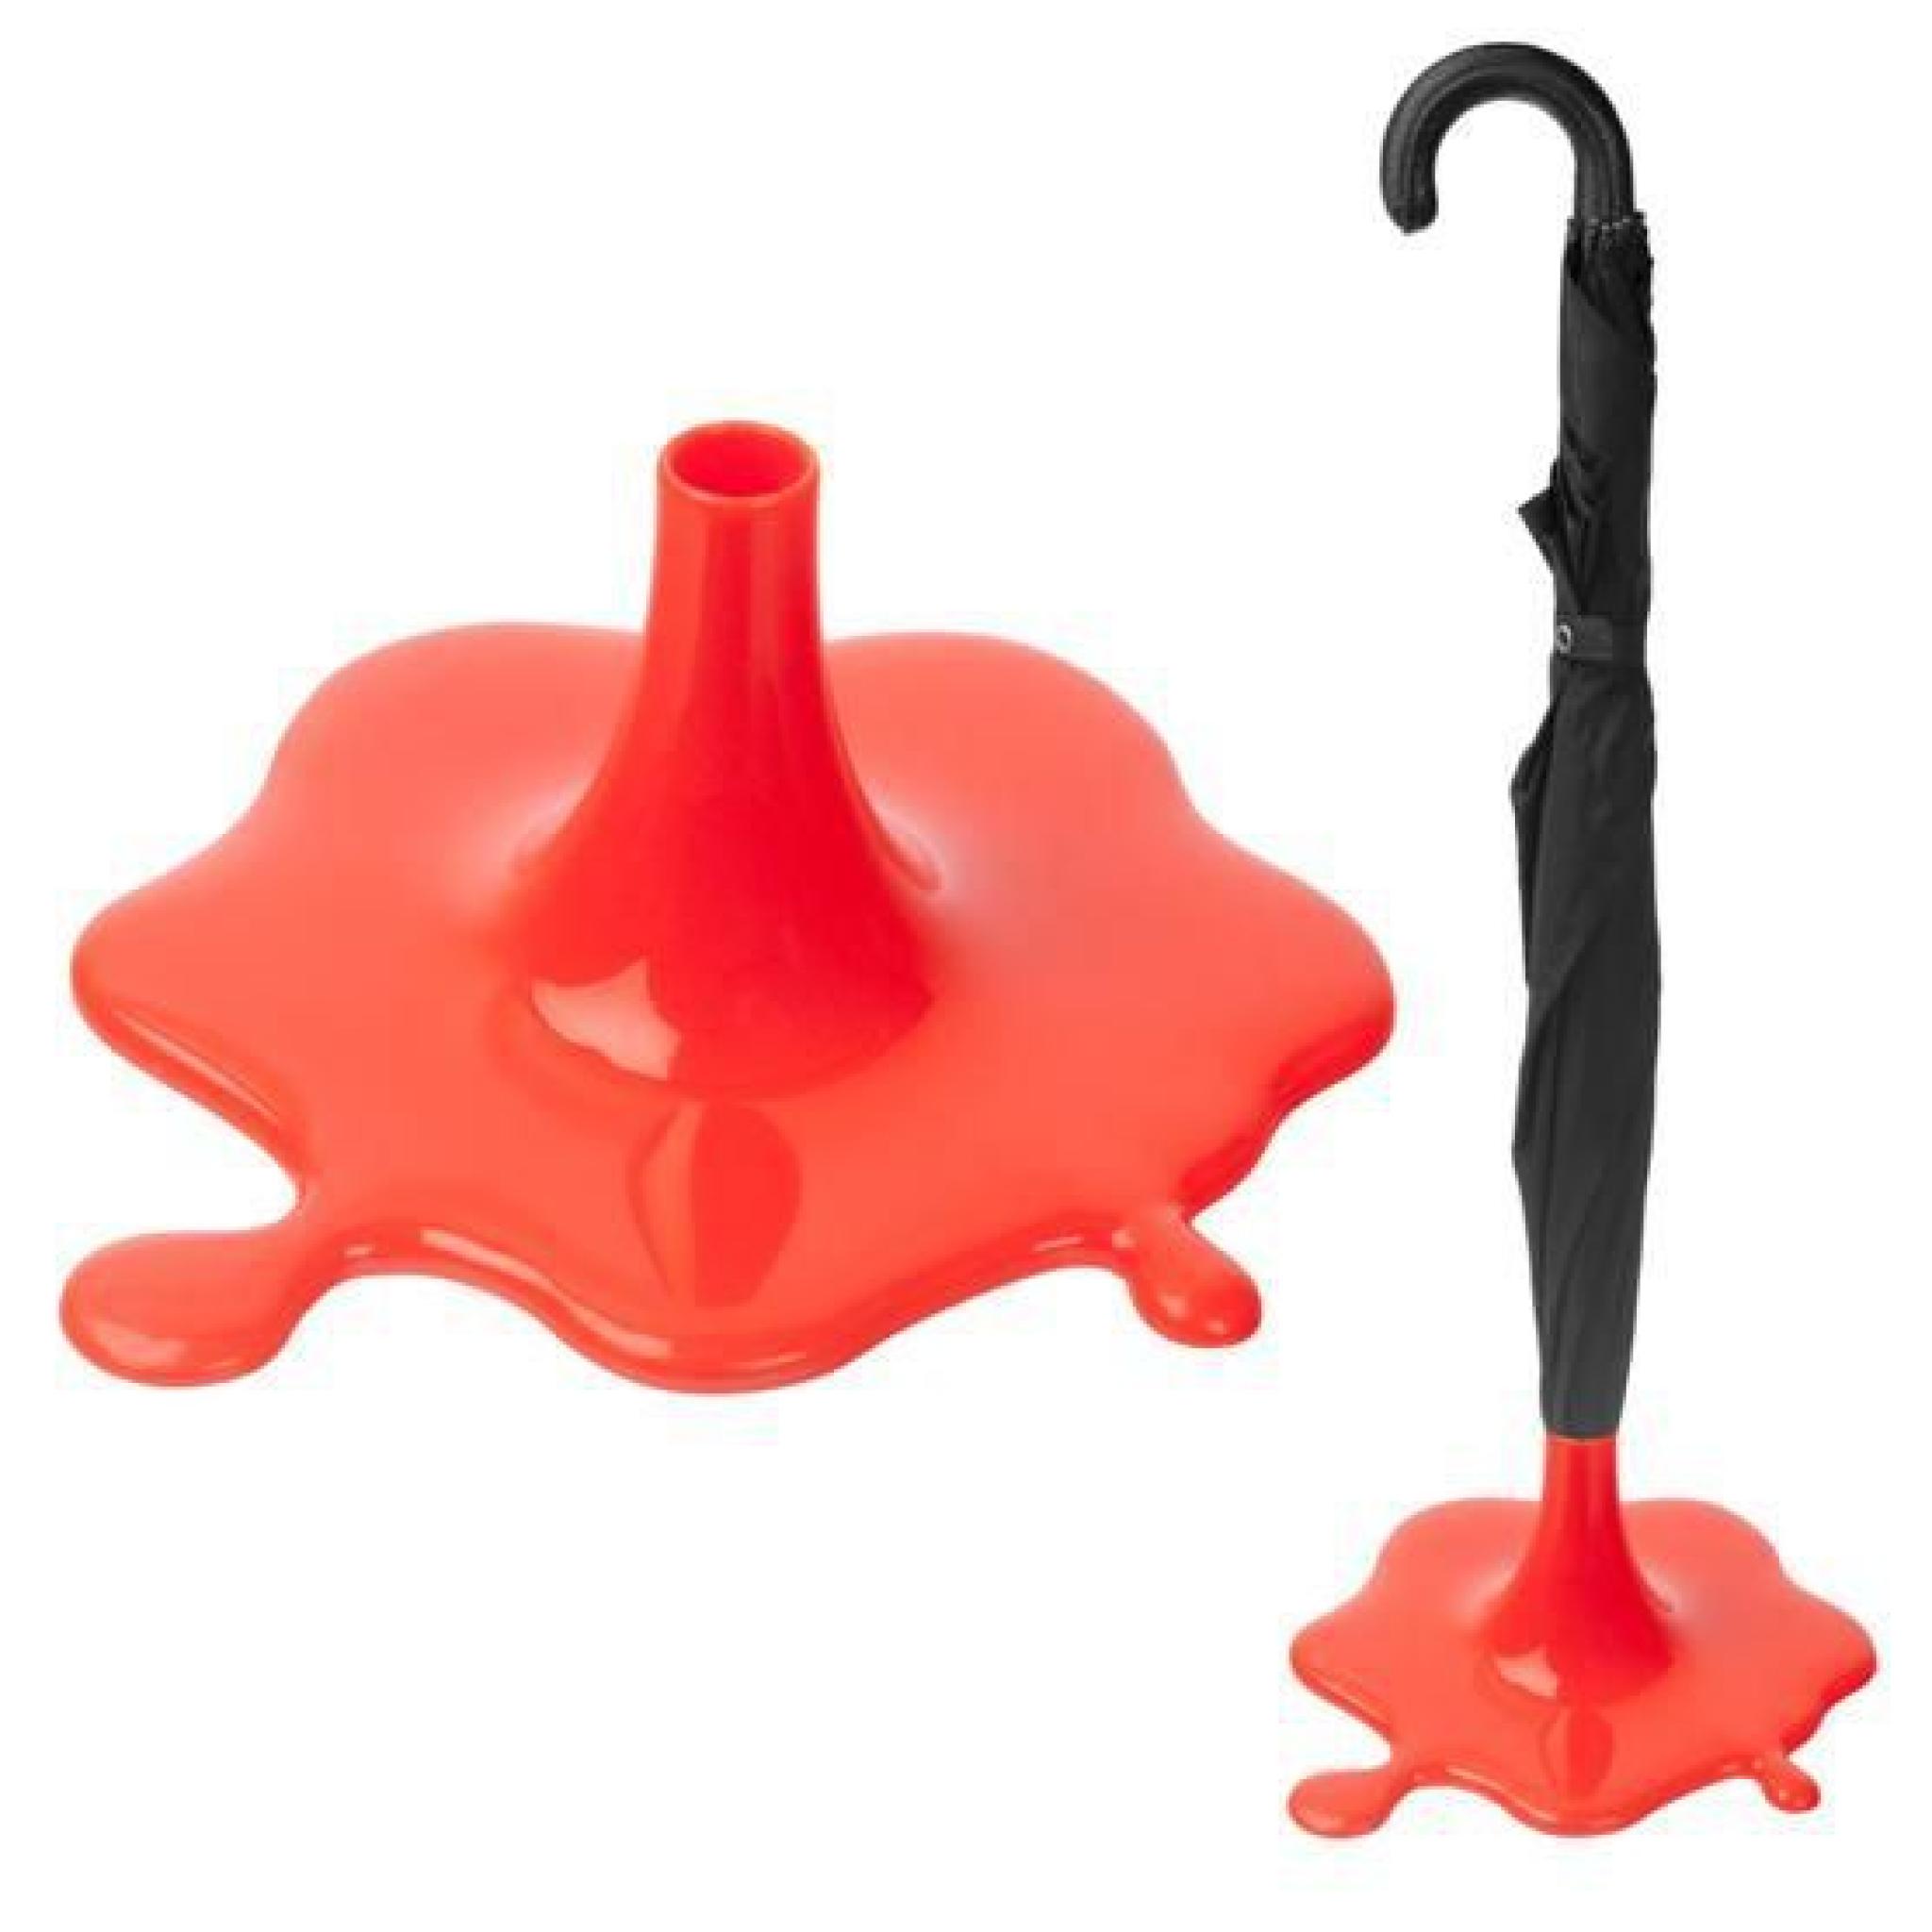 Porte parapluie design splash rouge 24,5x26,5x11cm